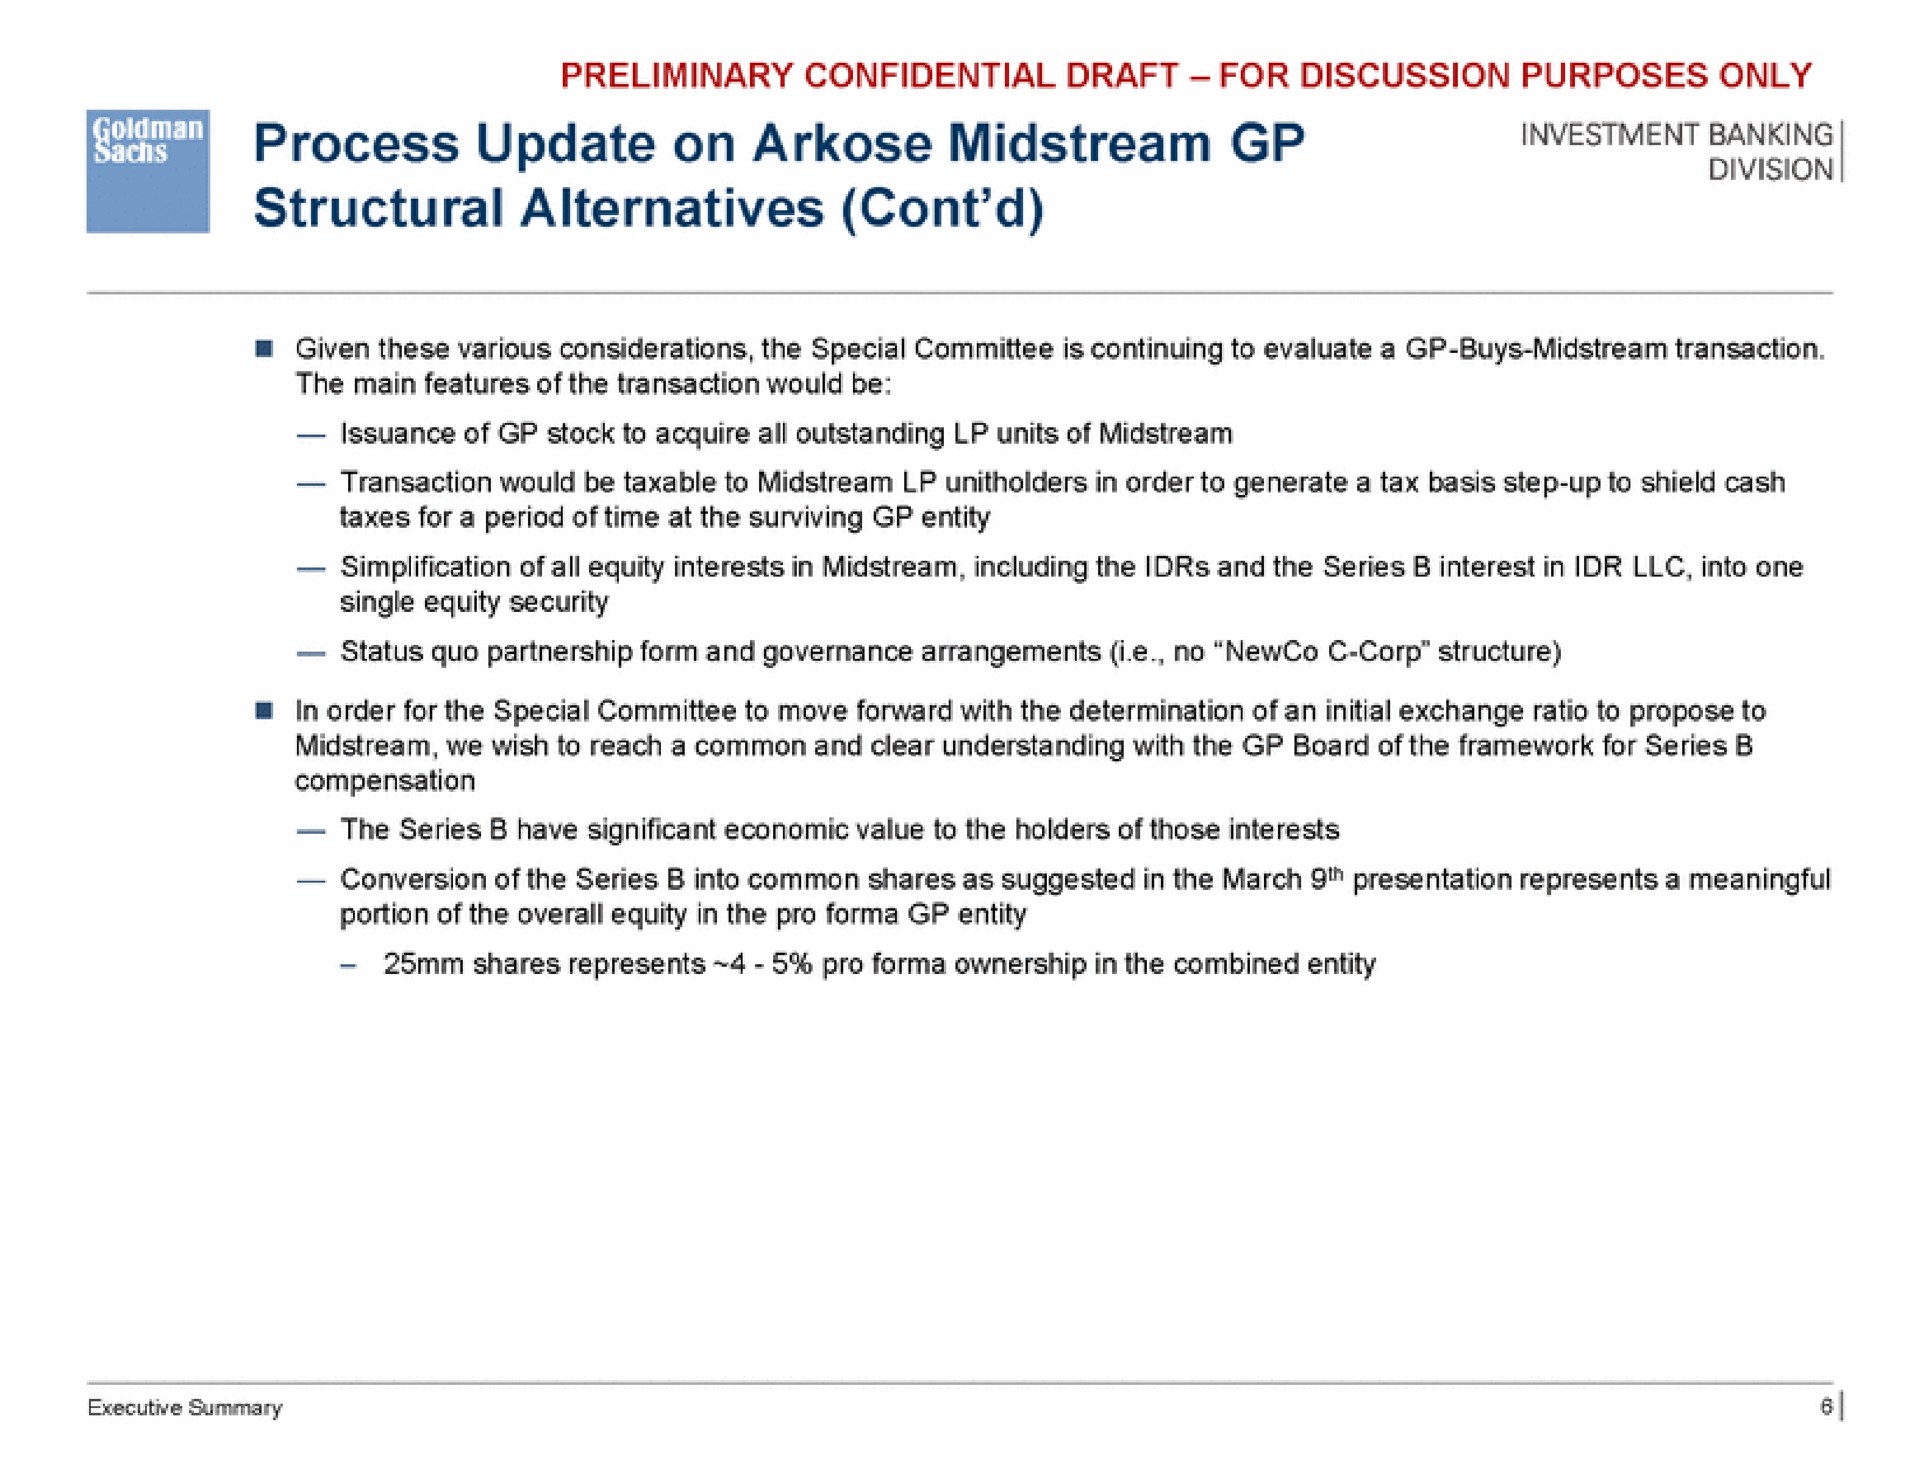 process update on arkose midstream on structural alternatives | Goldman Sachs